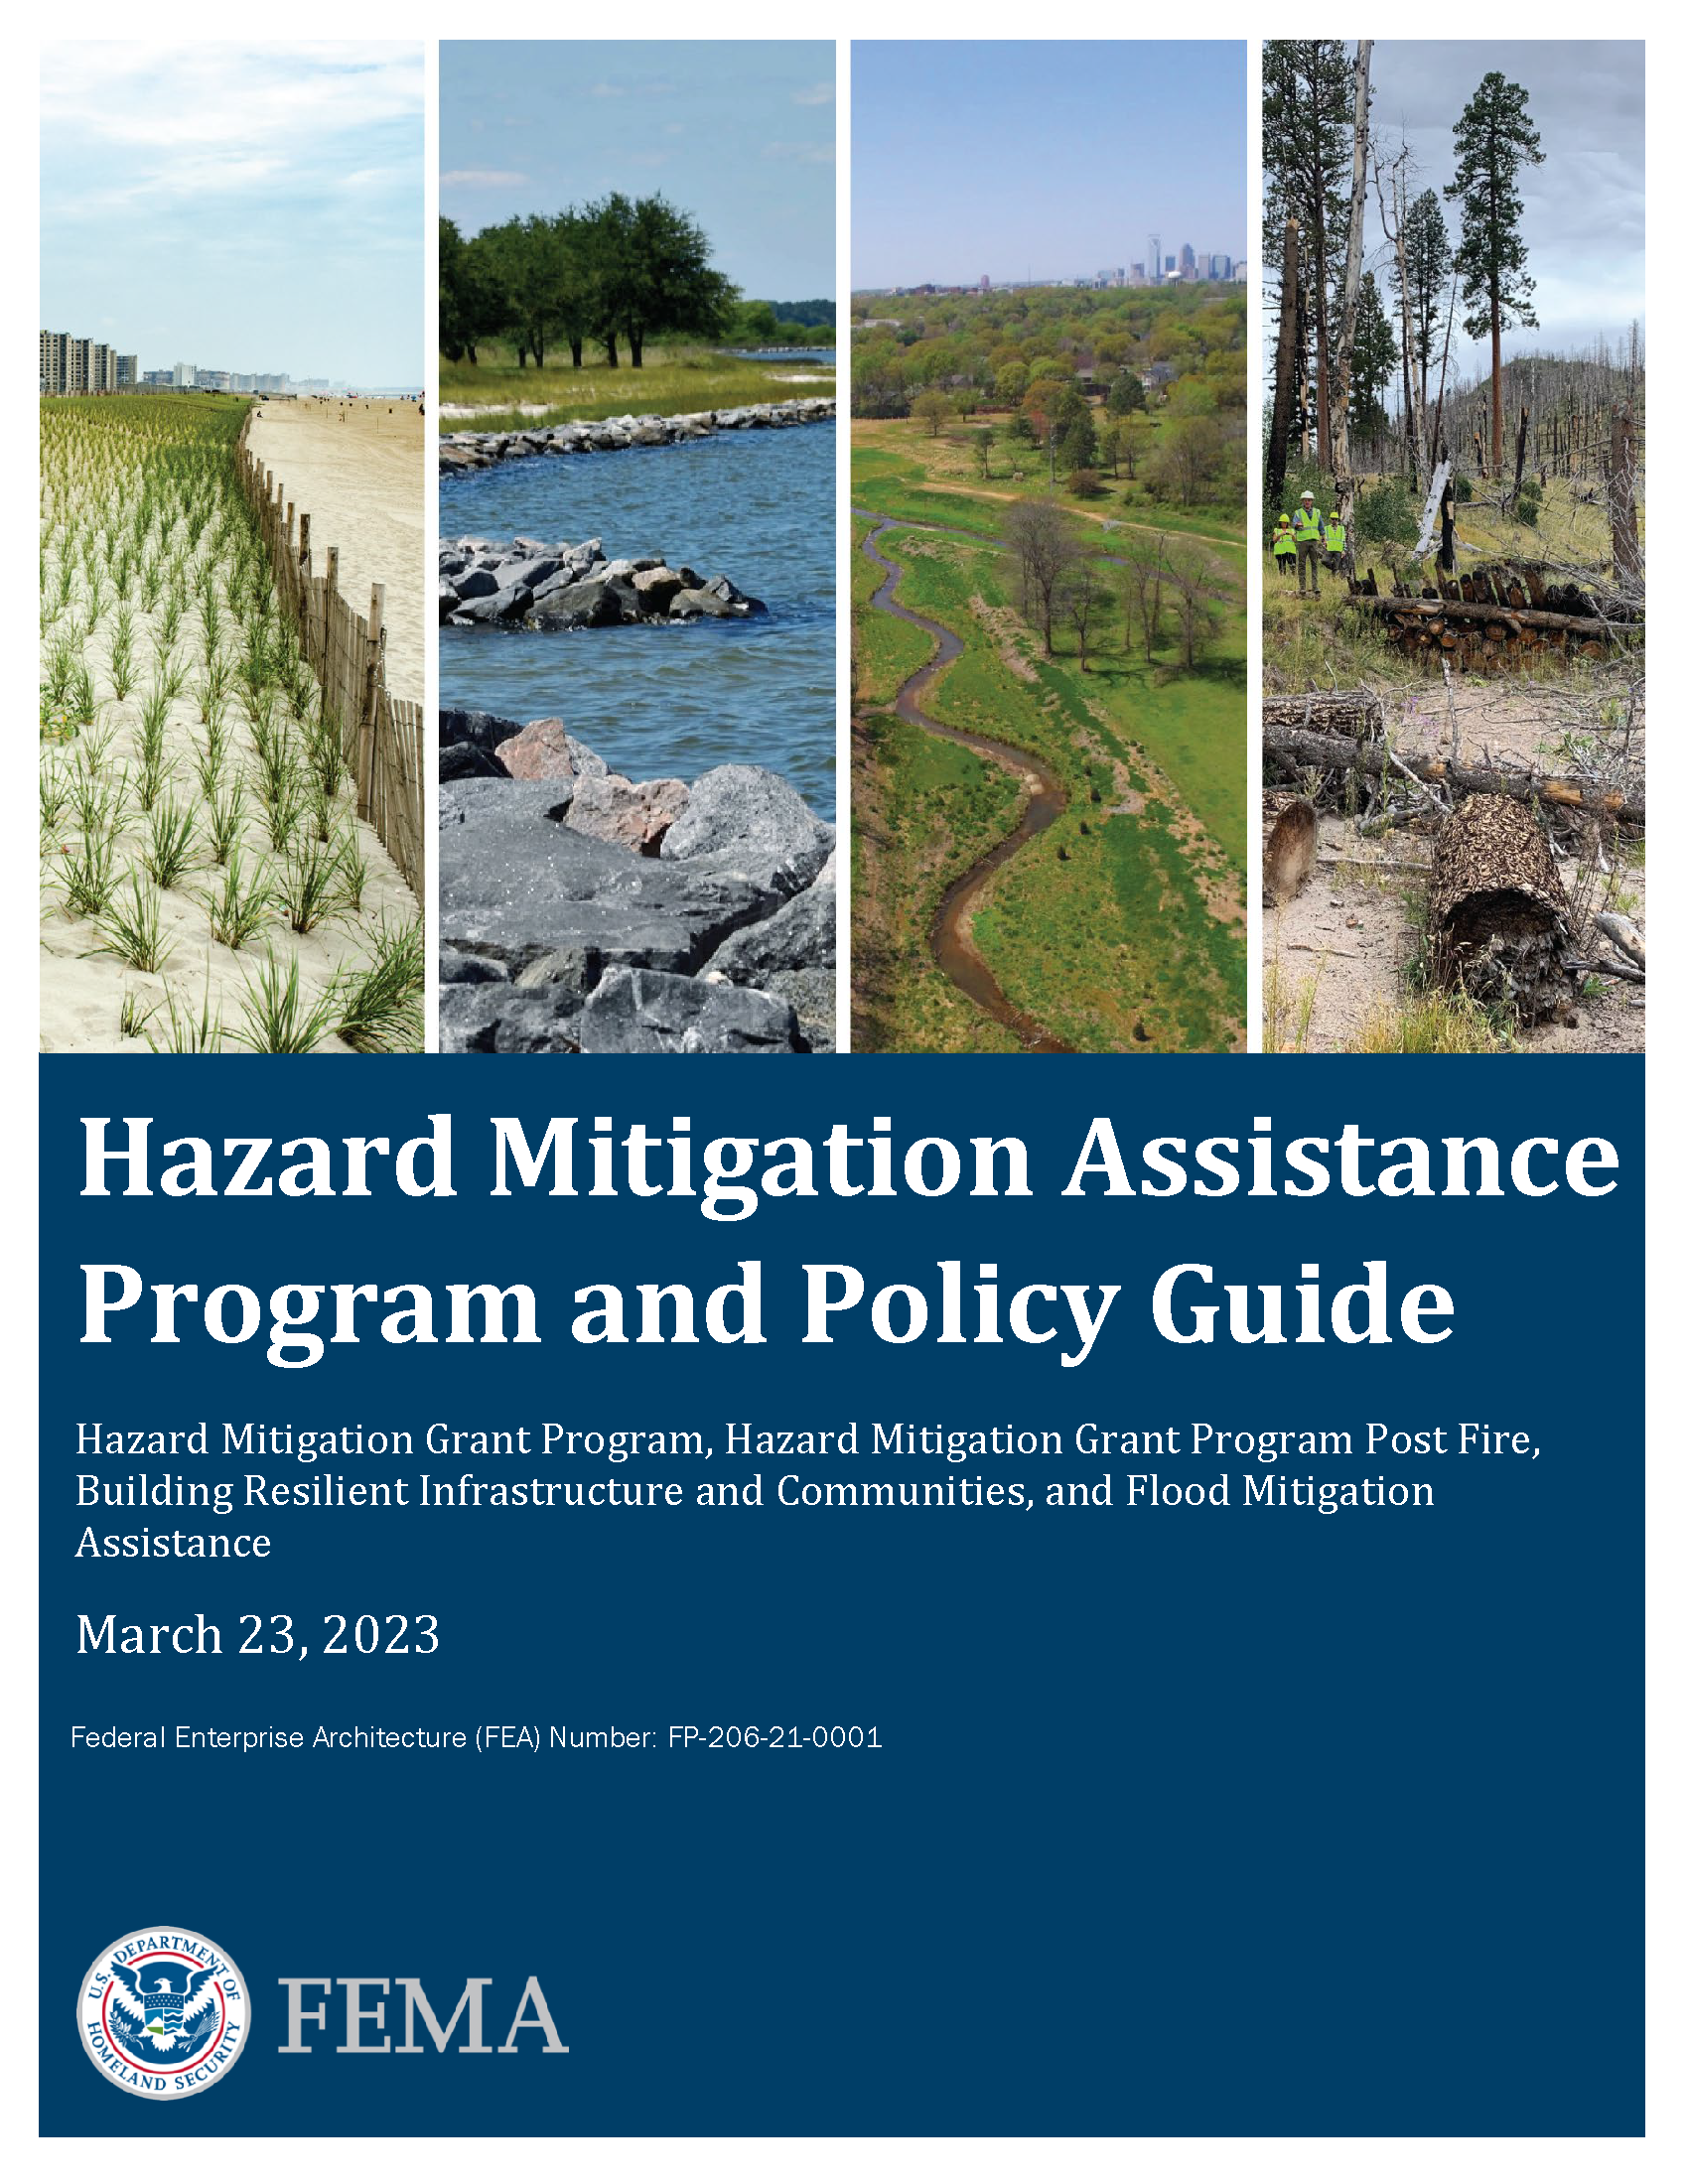 Hazard Mitigation Assistance Guidance Cover Image